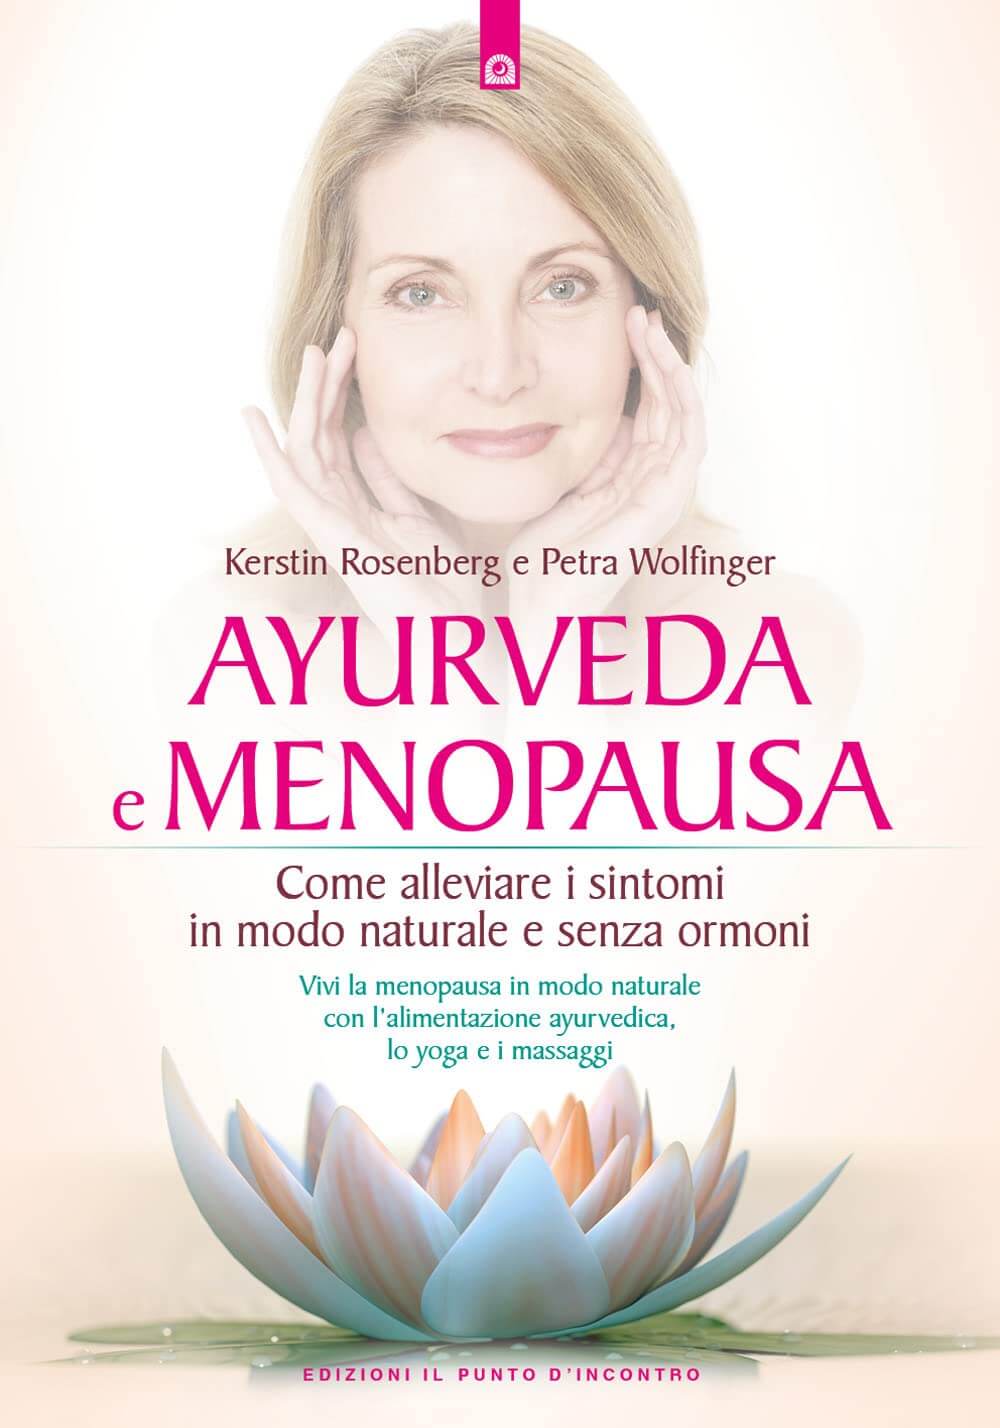 Ayurveda e Menopausa - Libro del Mese | Ayurvedic Point©, Milano